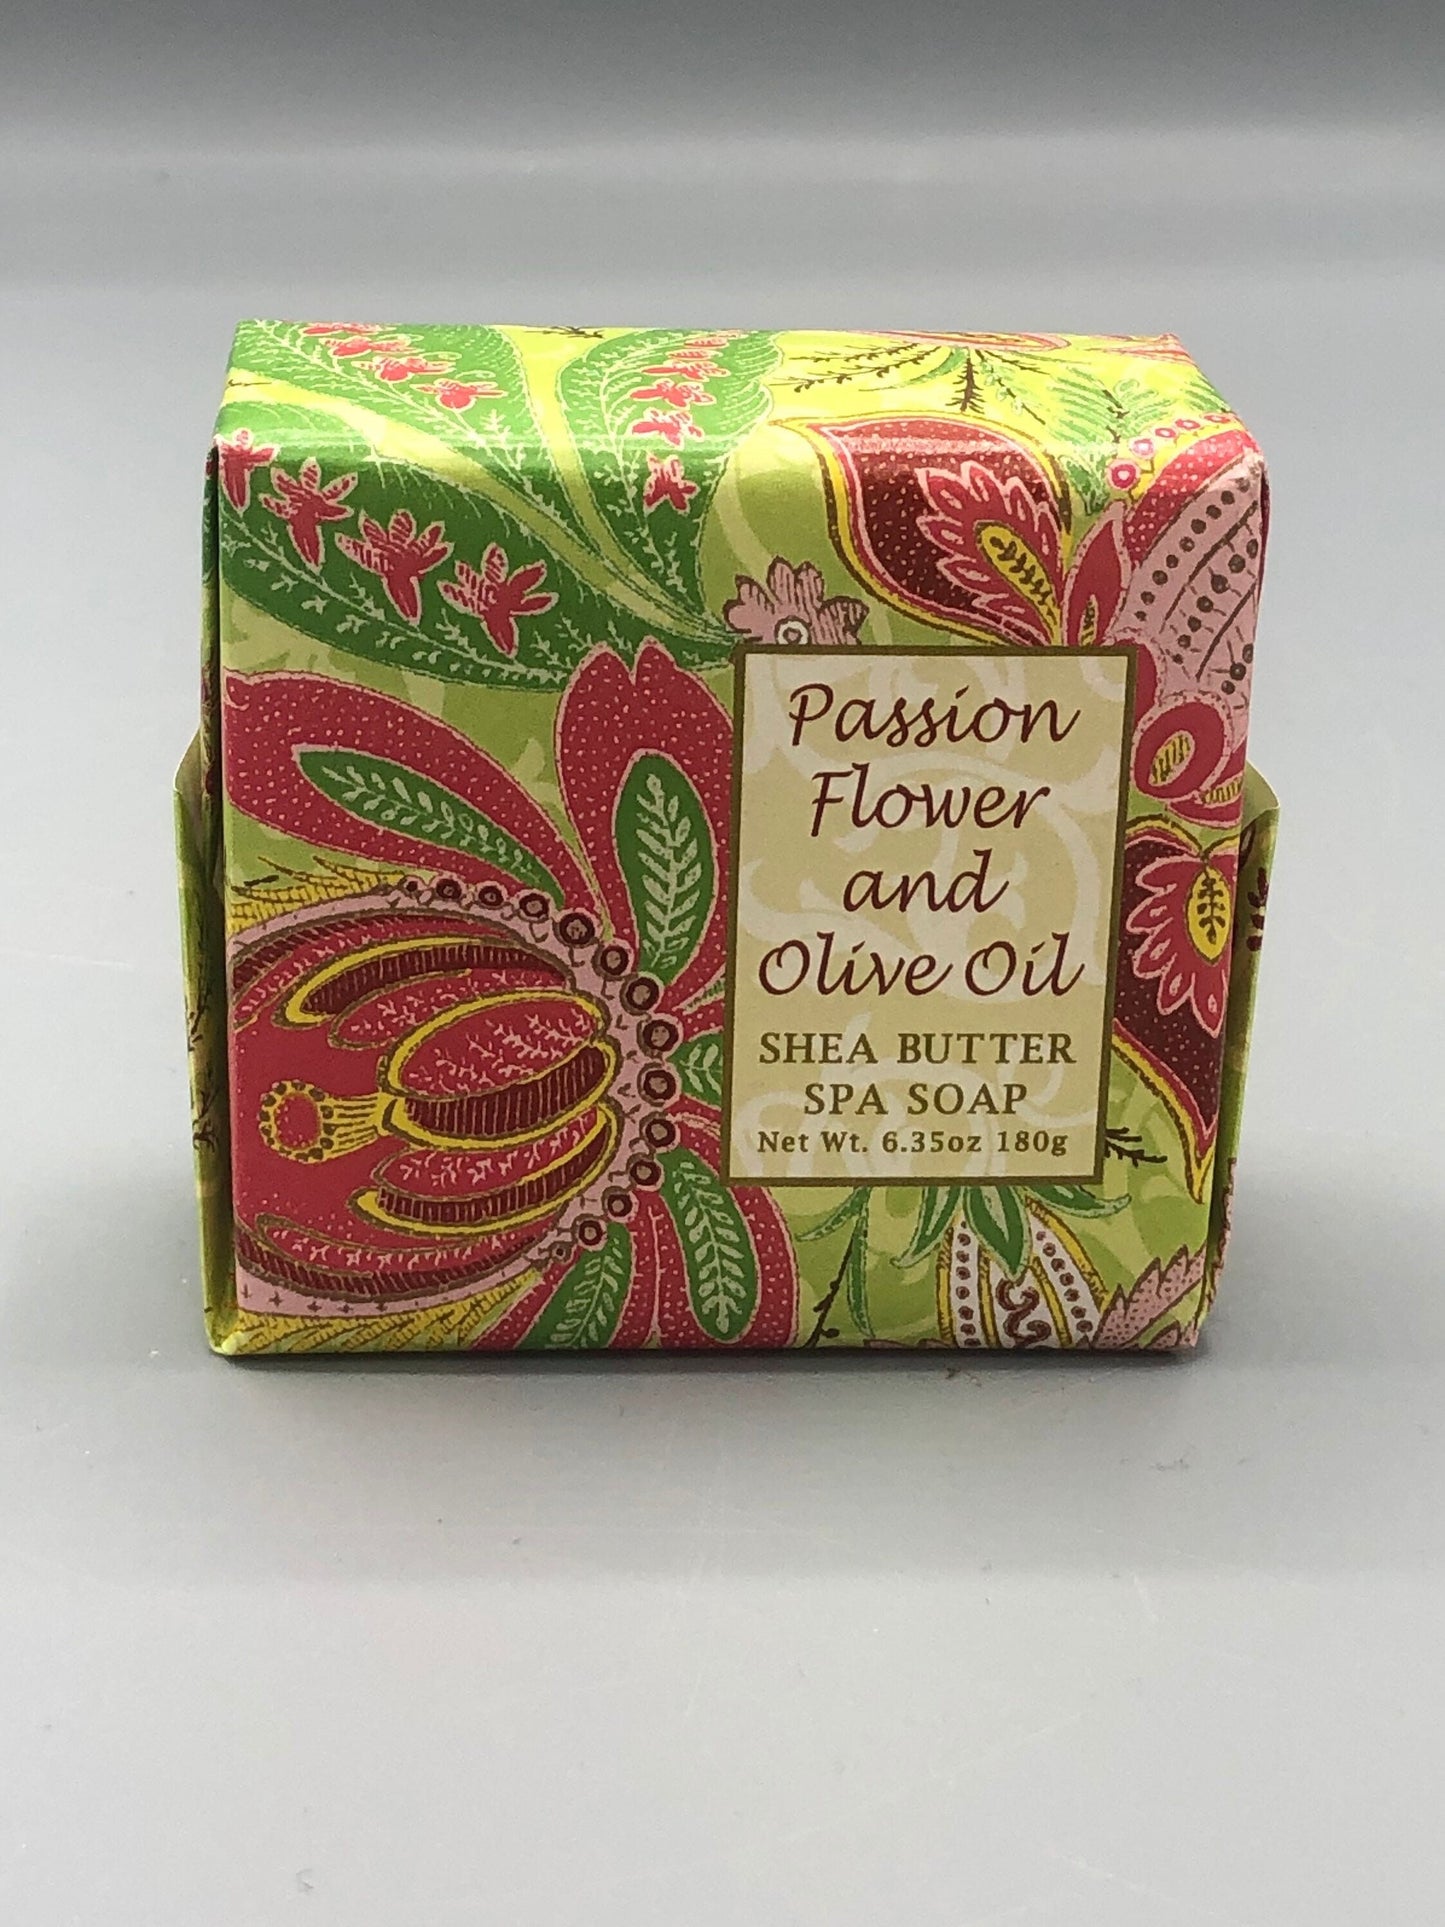 Passion flower & olive oil shea butter Bar soap 6.35oz